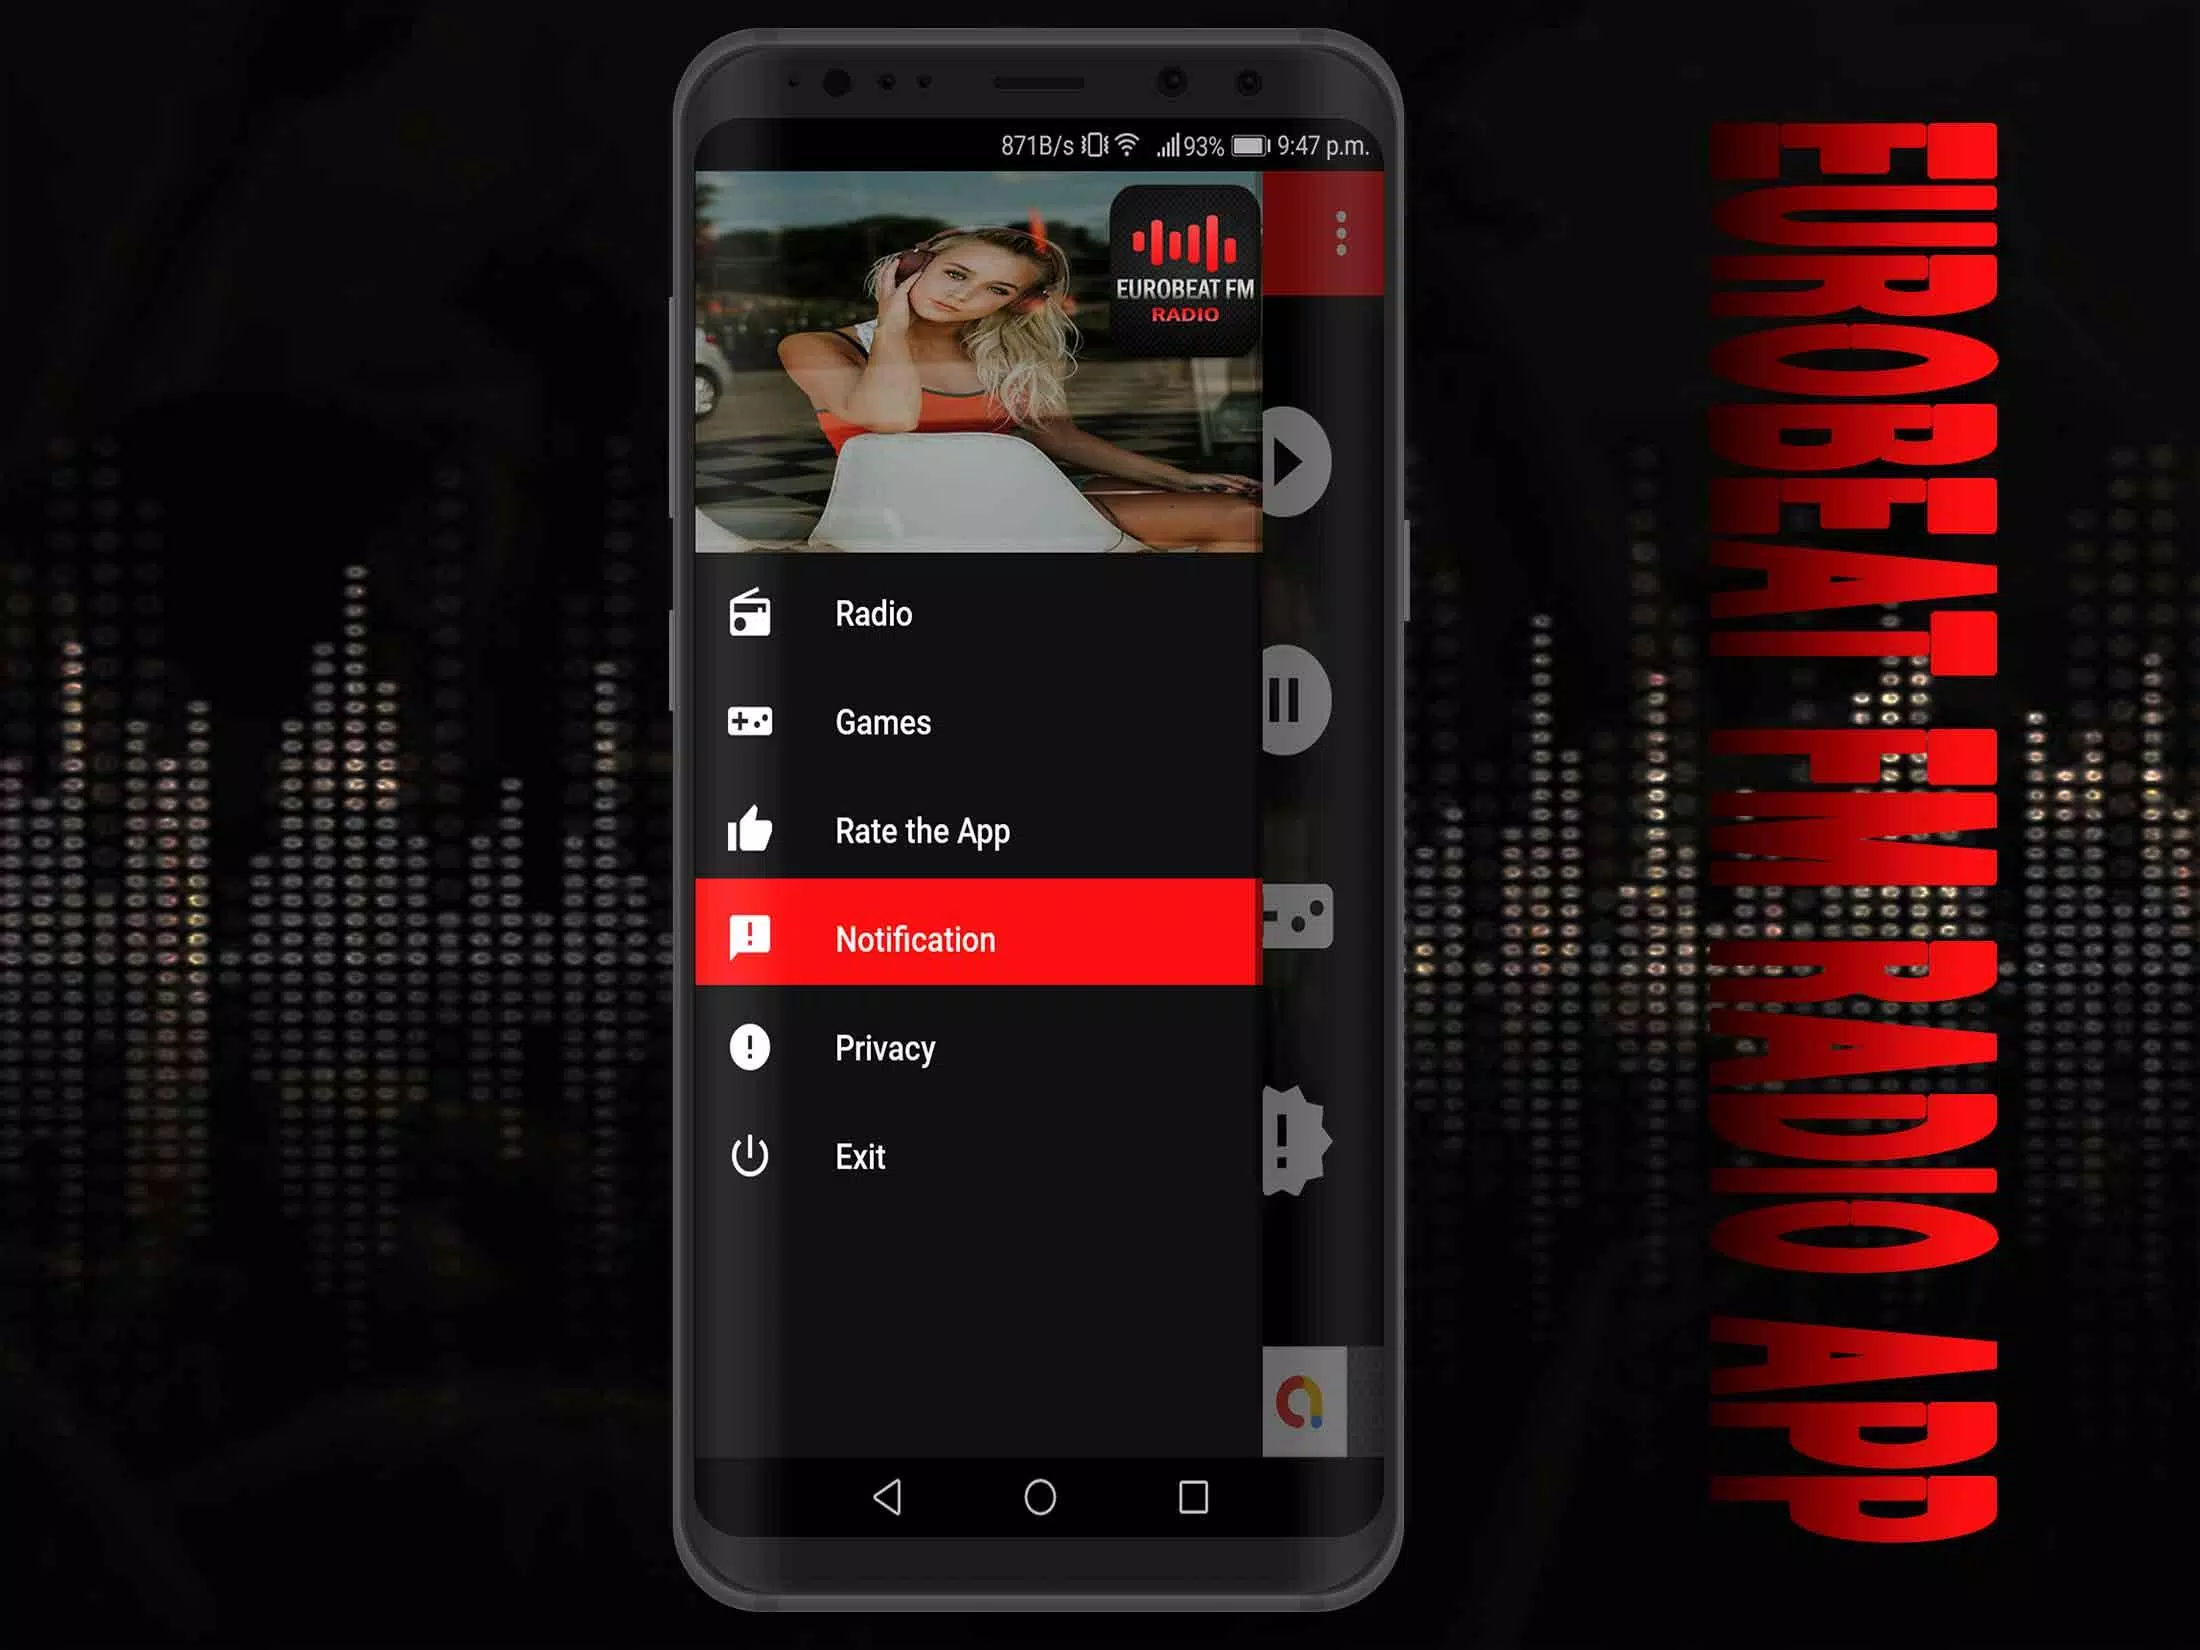 Eurobeat FM Radio App APK for Android Download